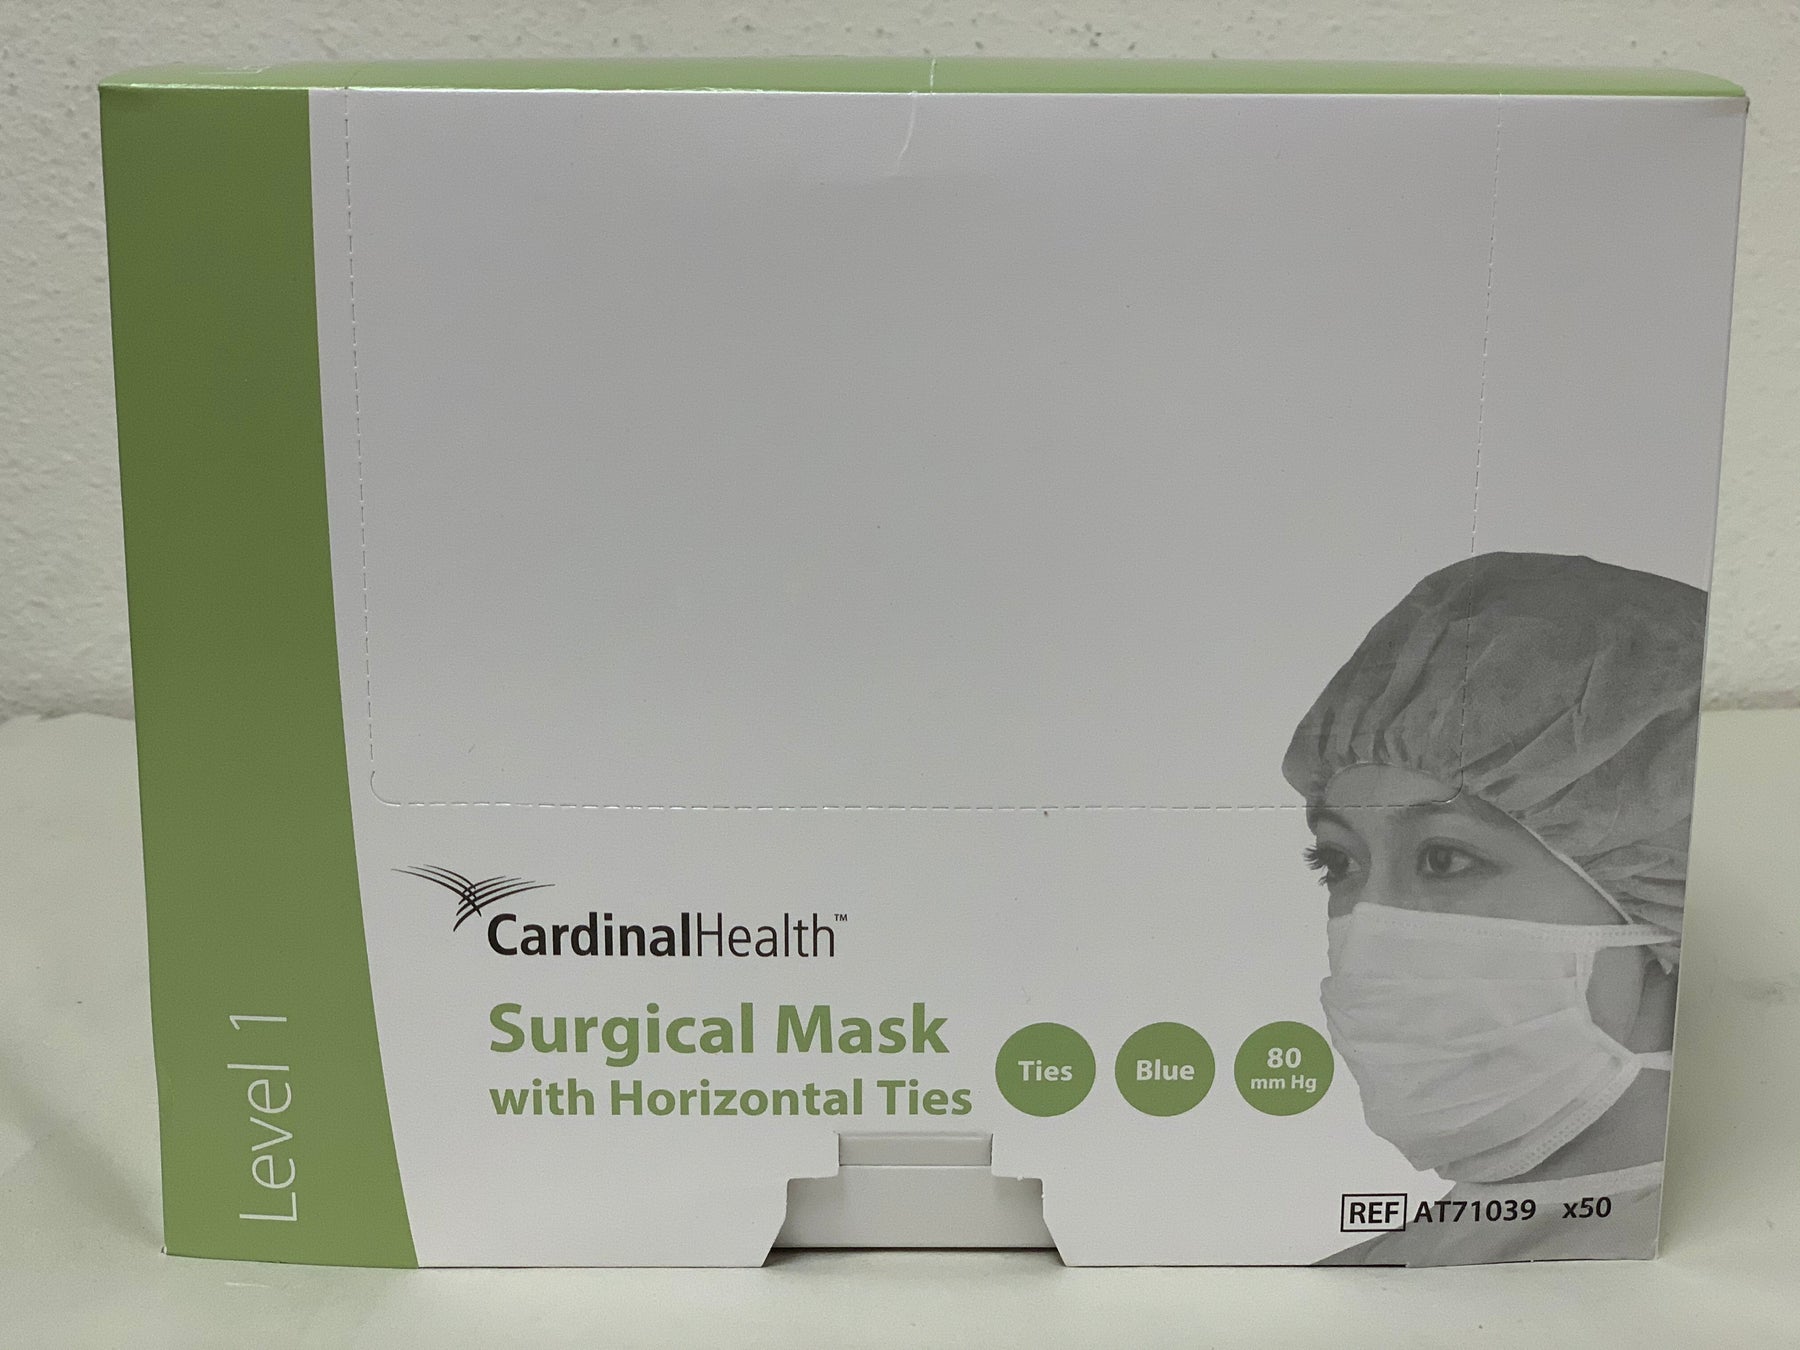 Cardinal Health AT71039 - Surgical Mask with Horizontal Ties Blue - Box of 50 Masks